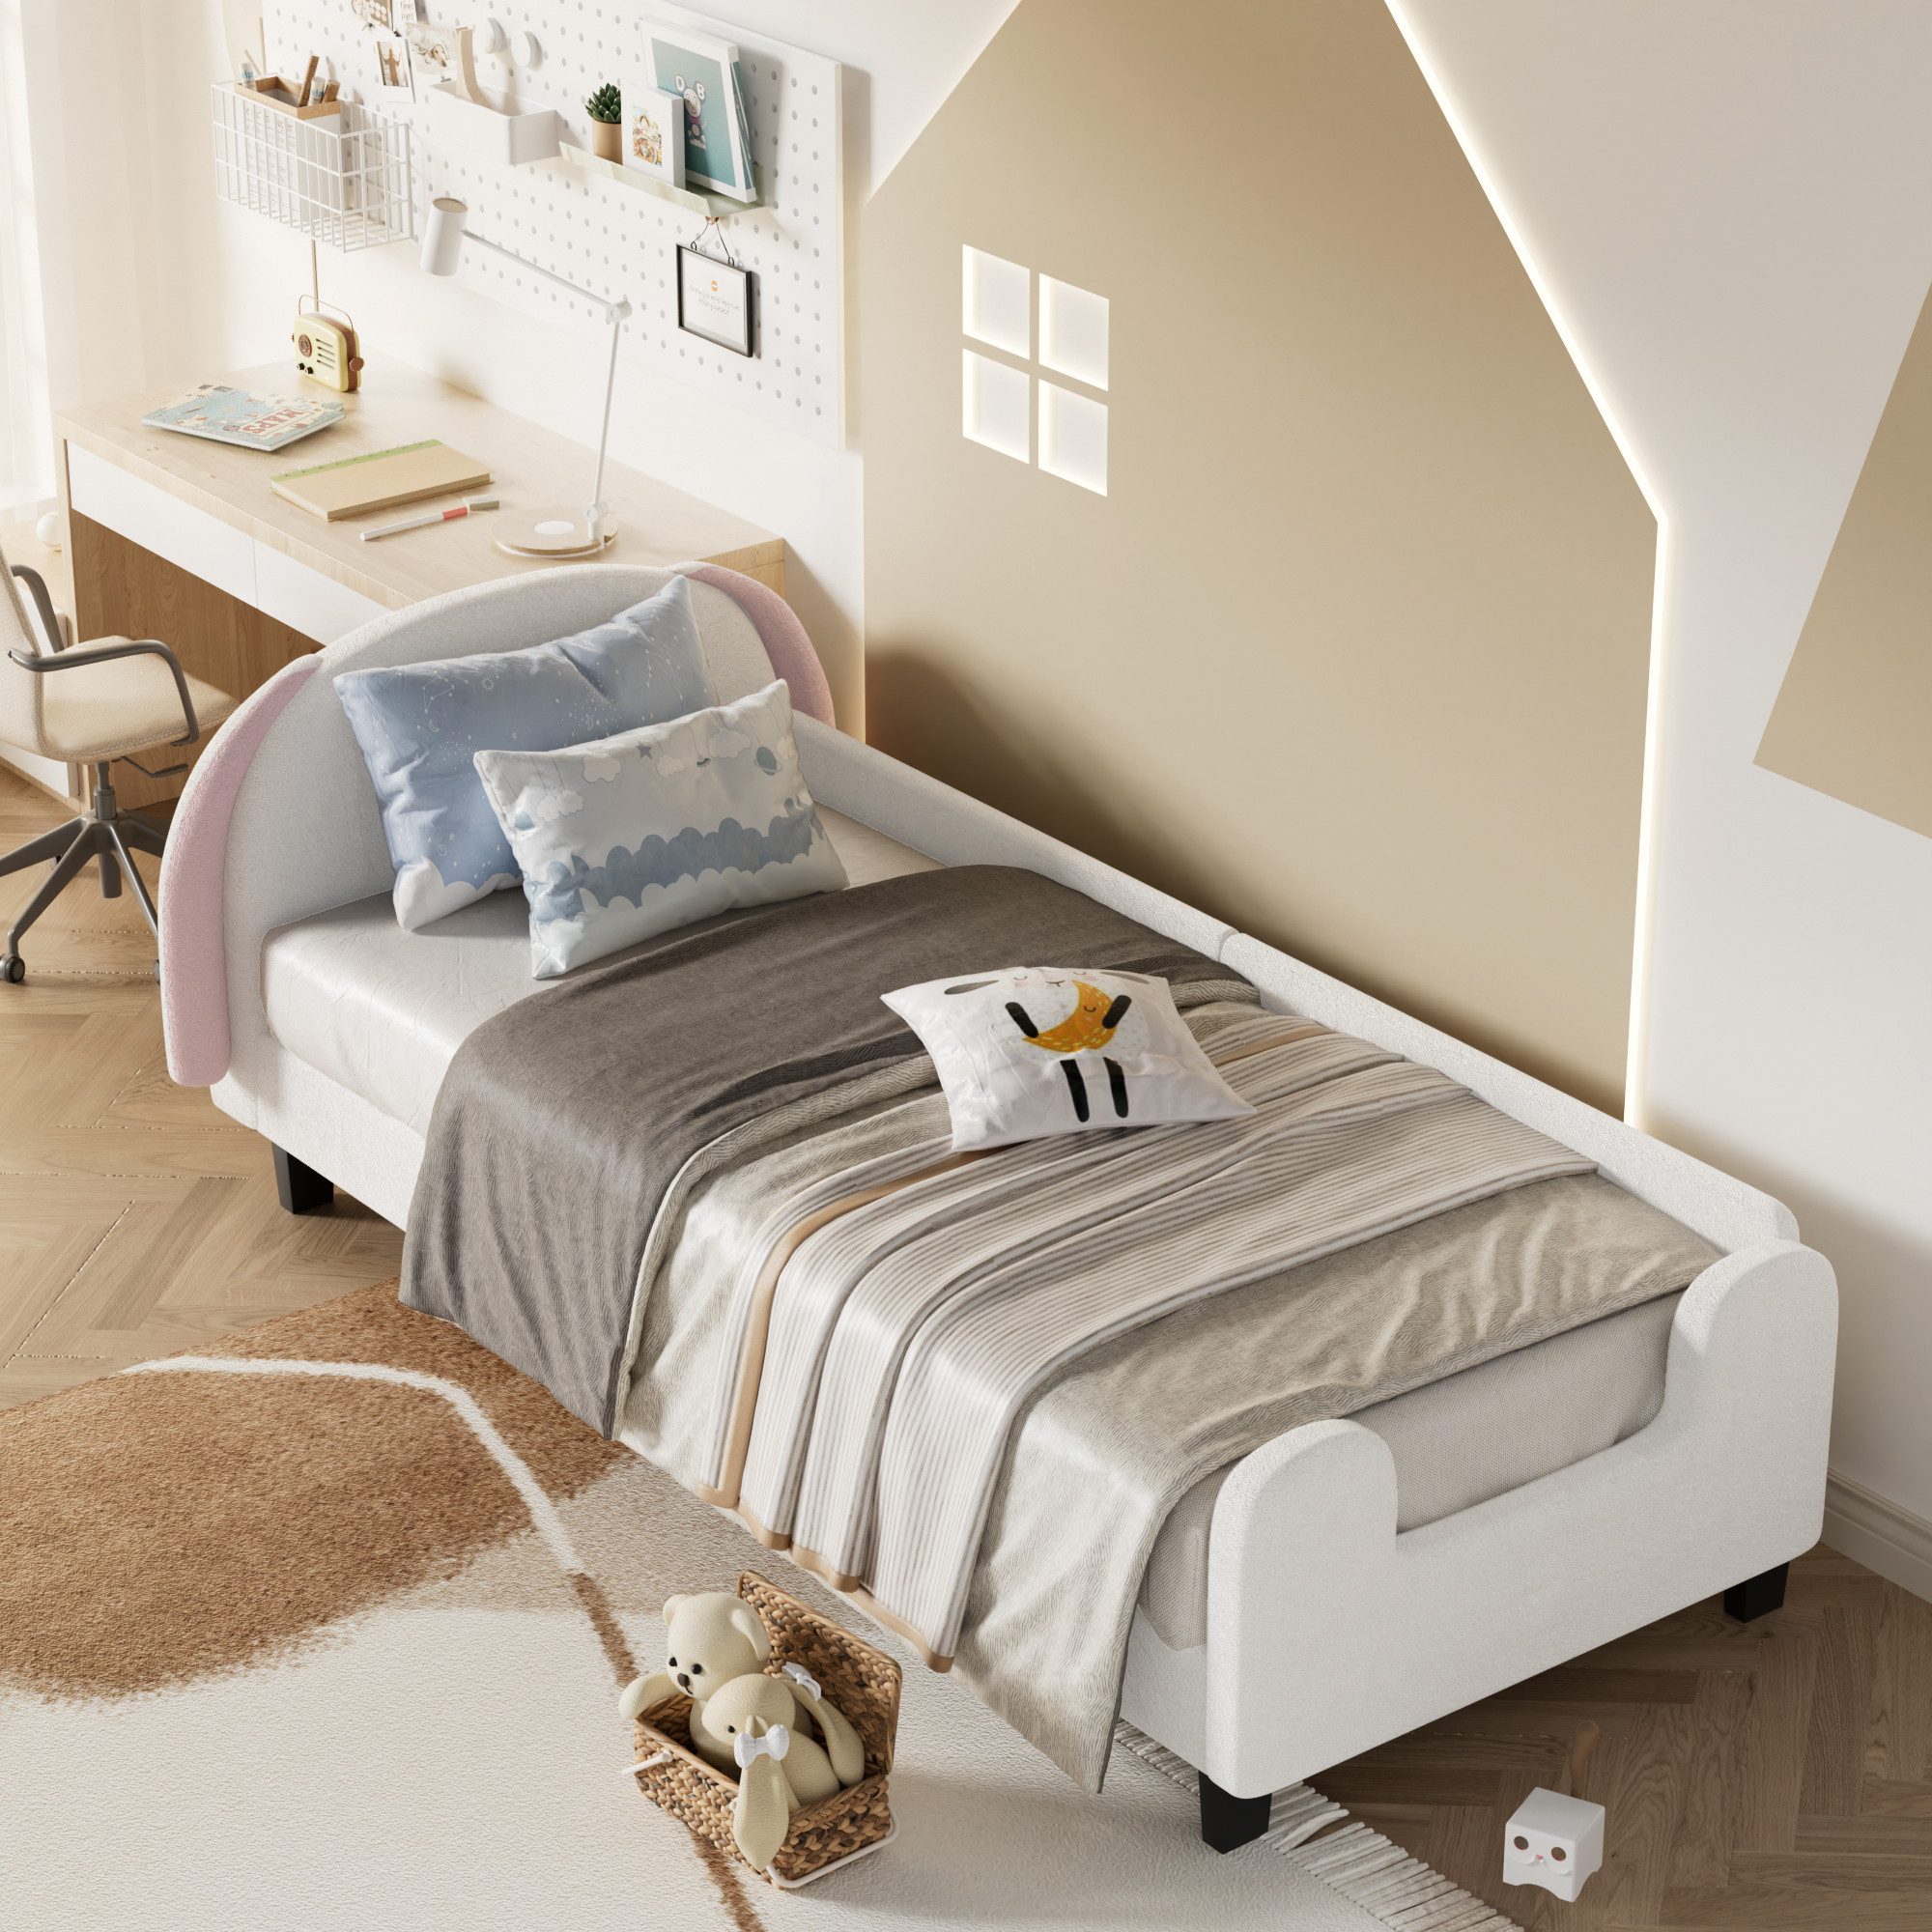 REDOM Kinderbett Kinderbett in Hasenform (90x200cm,ohne Matratze), Kinderbett in Hasenform, einfacher Aufbau